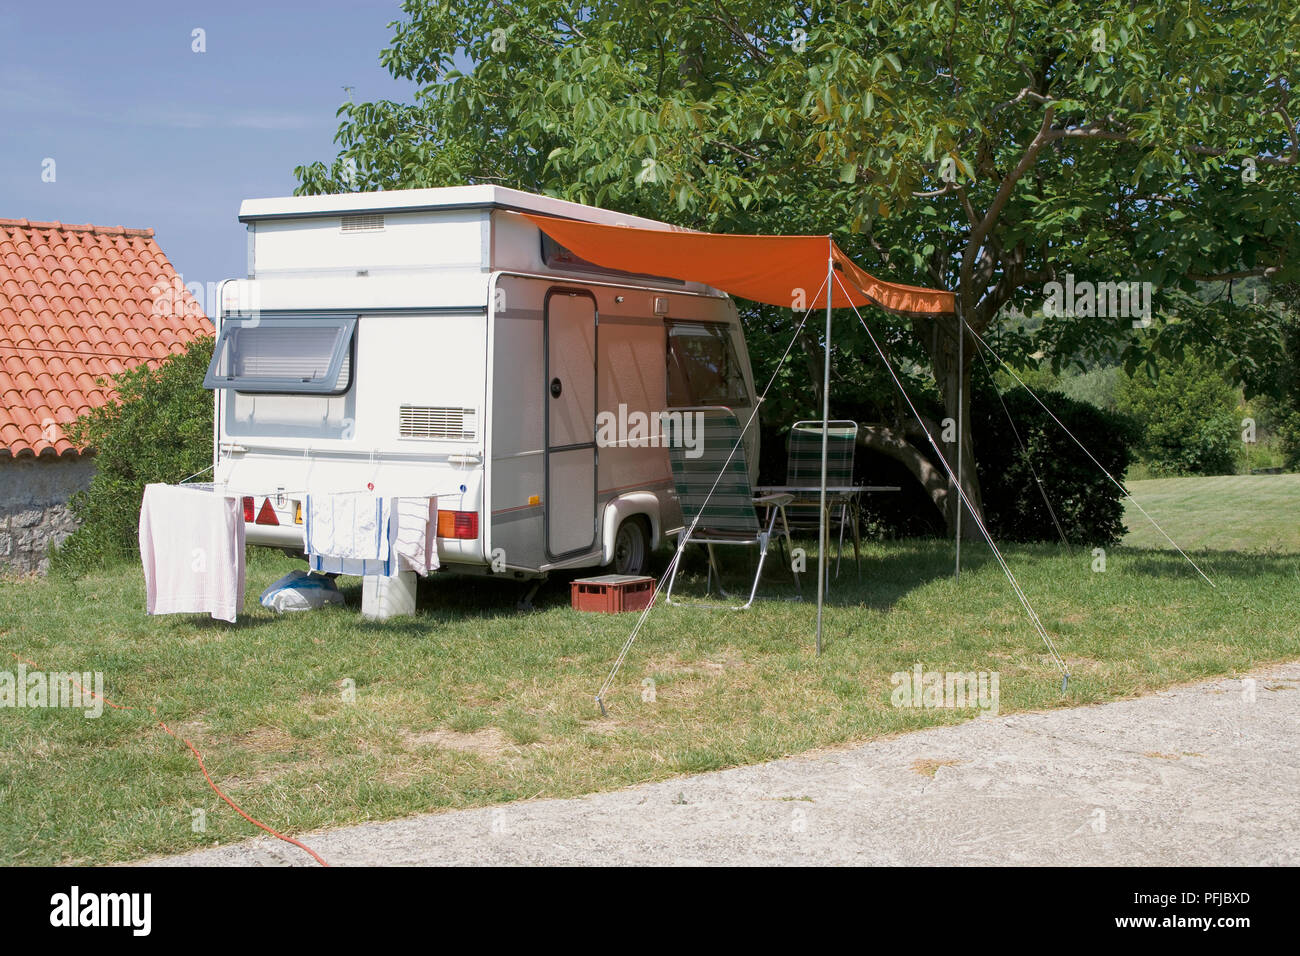 Croatia, motor caravan with awning parked under tree Stock Photo